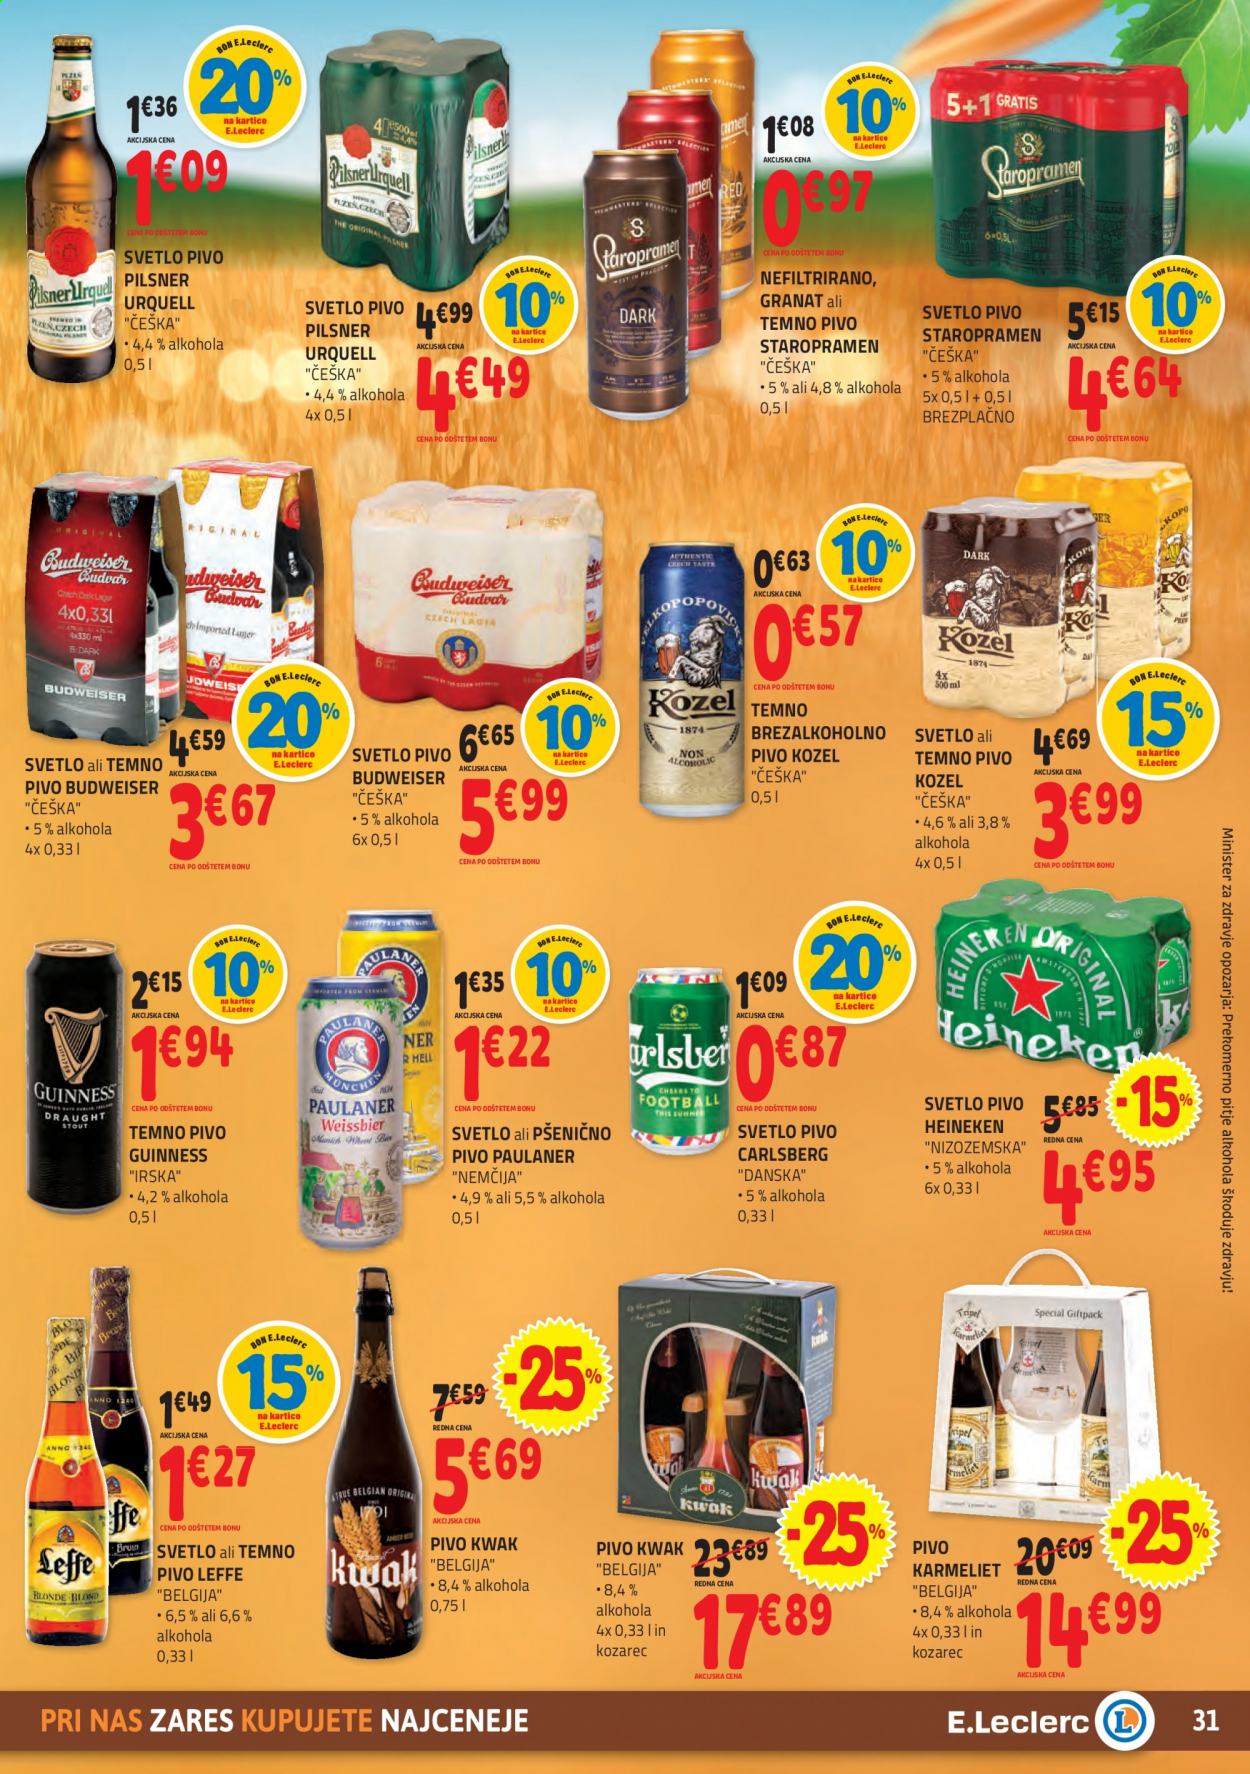 thumbnail - E.Leclerc katalog - 13.1.2021 - 23.1.2021 - Ponudba izdelkov - brezalkoholno pivo, Heineken, Kozel, Pilsner Urquell, Staropramen, svetlo pivo, temno pivo, pivo. Stran 31.